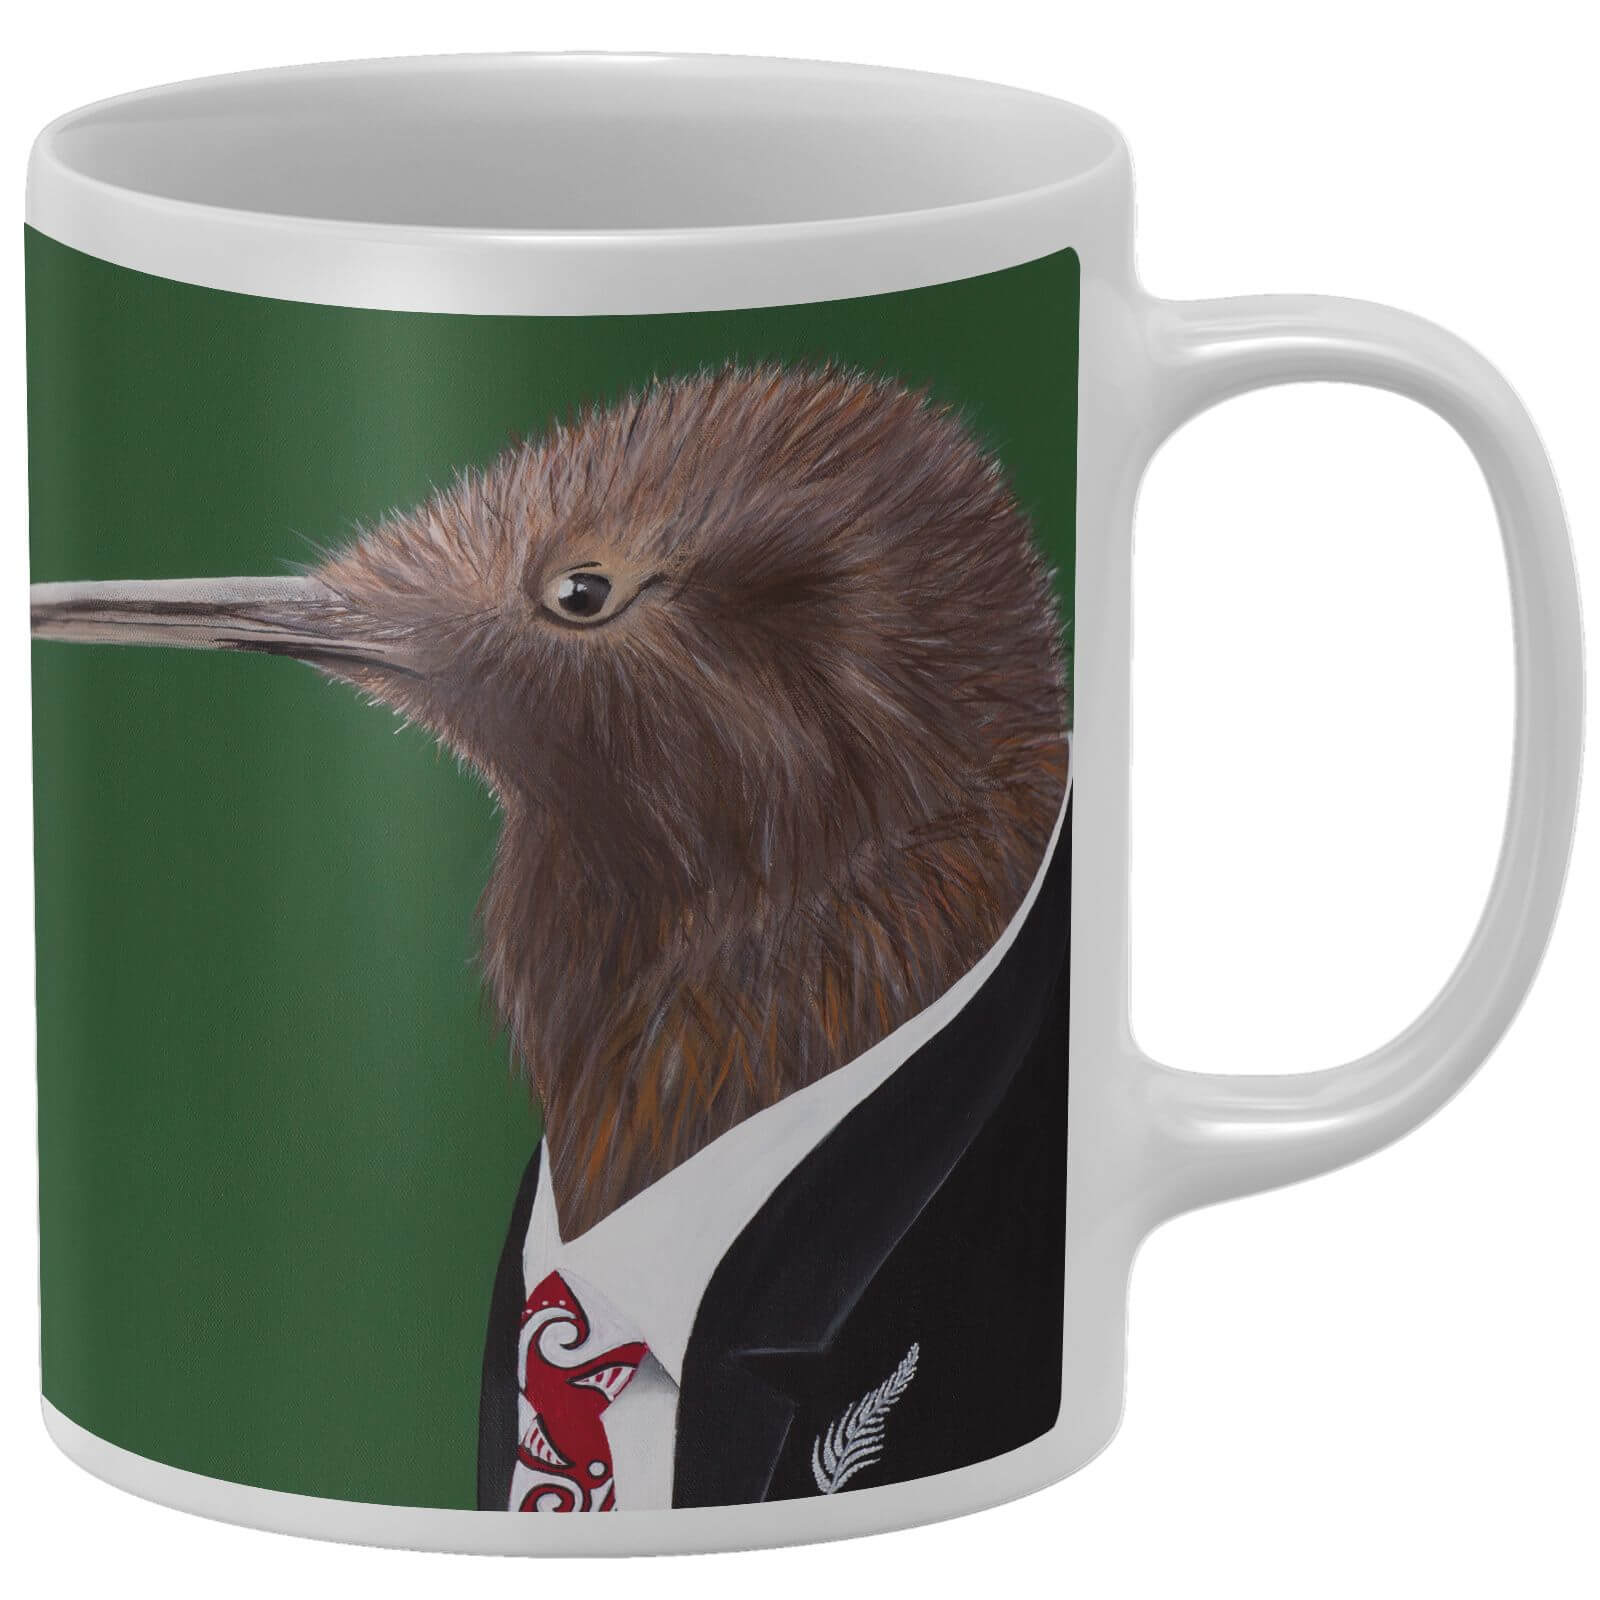 Kiwi In Suit Mug